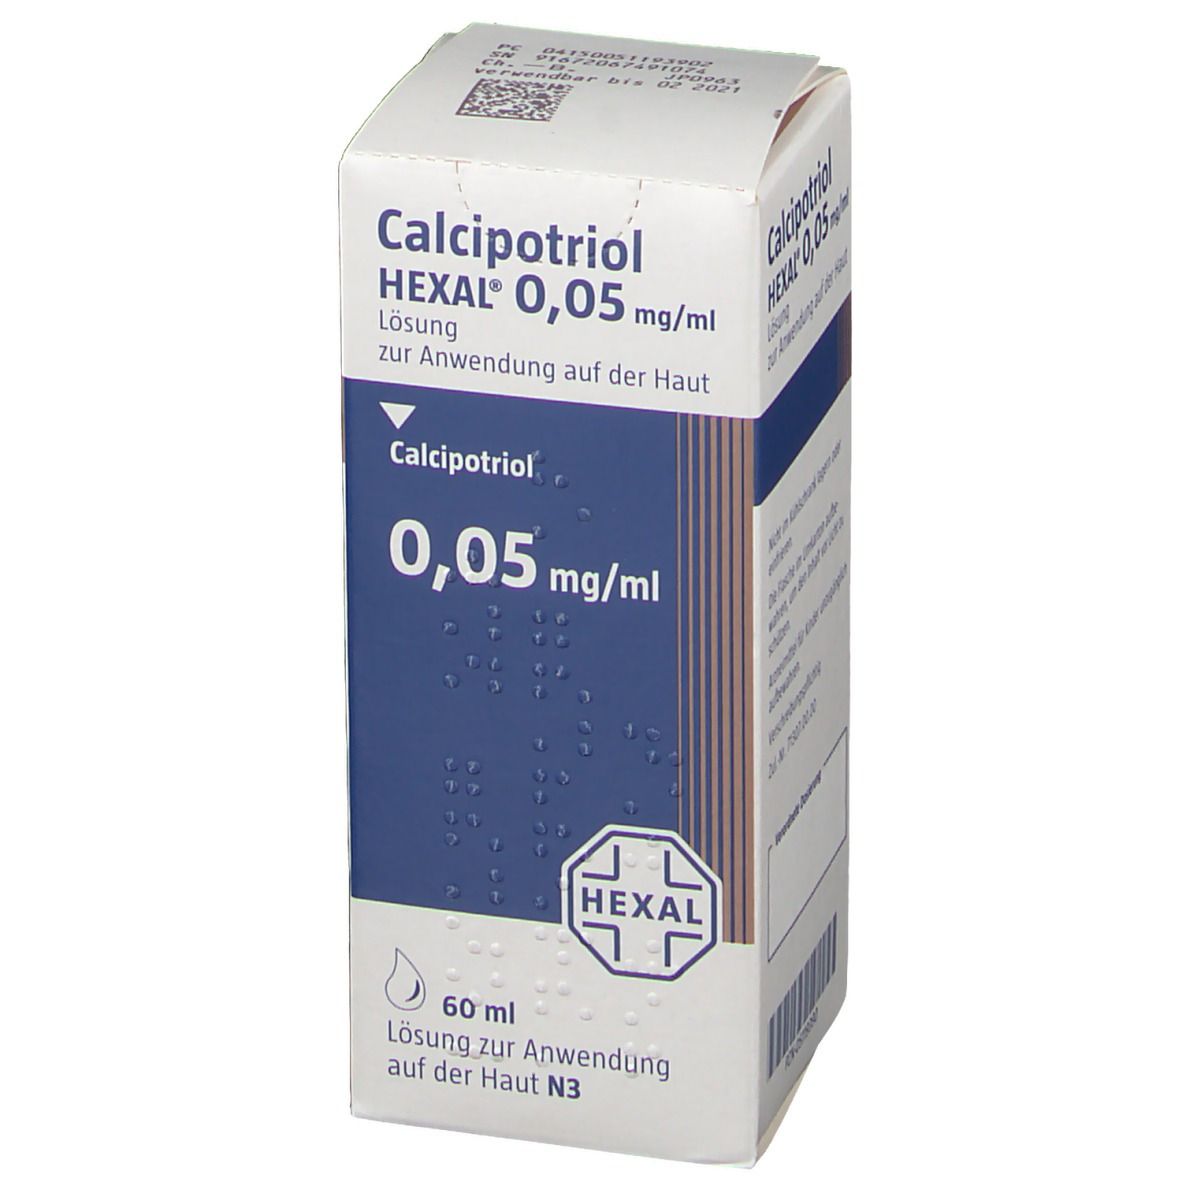 Calcipotriol HEXAL® 0,05 mg/ml